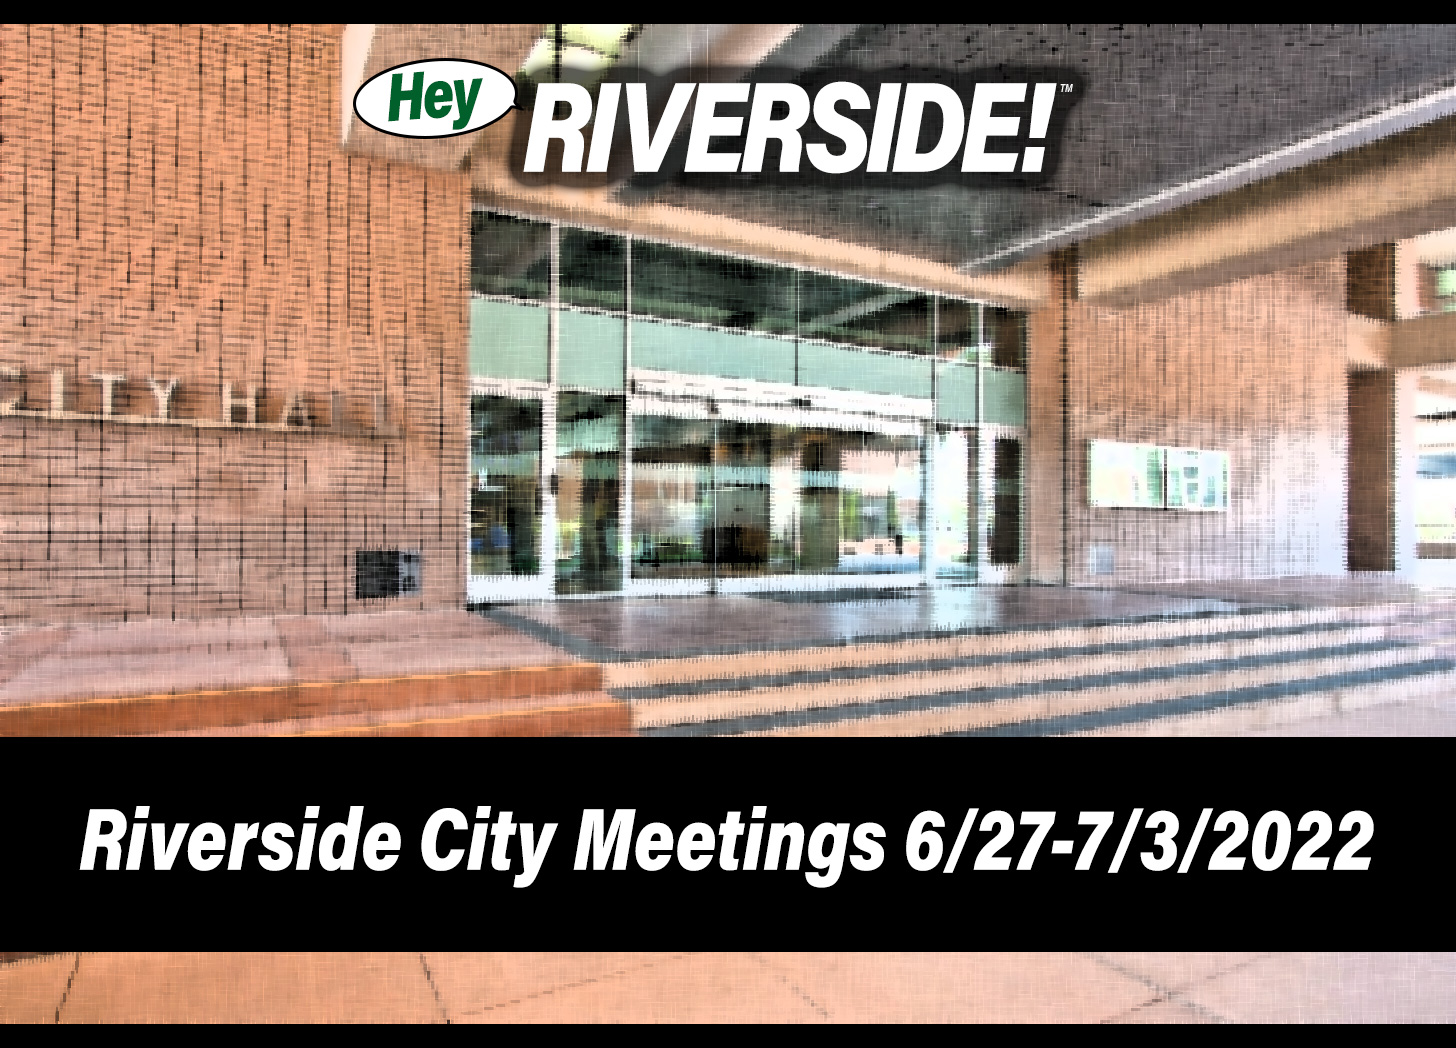 Riverside City Meetings June 27th through July 3rd